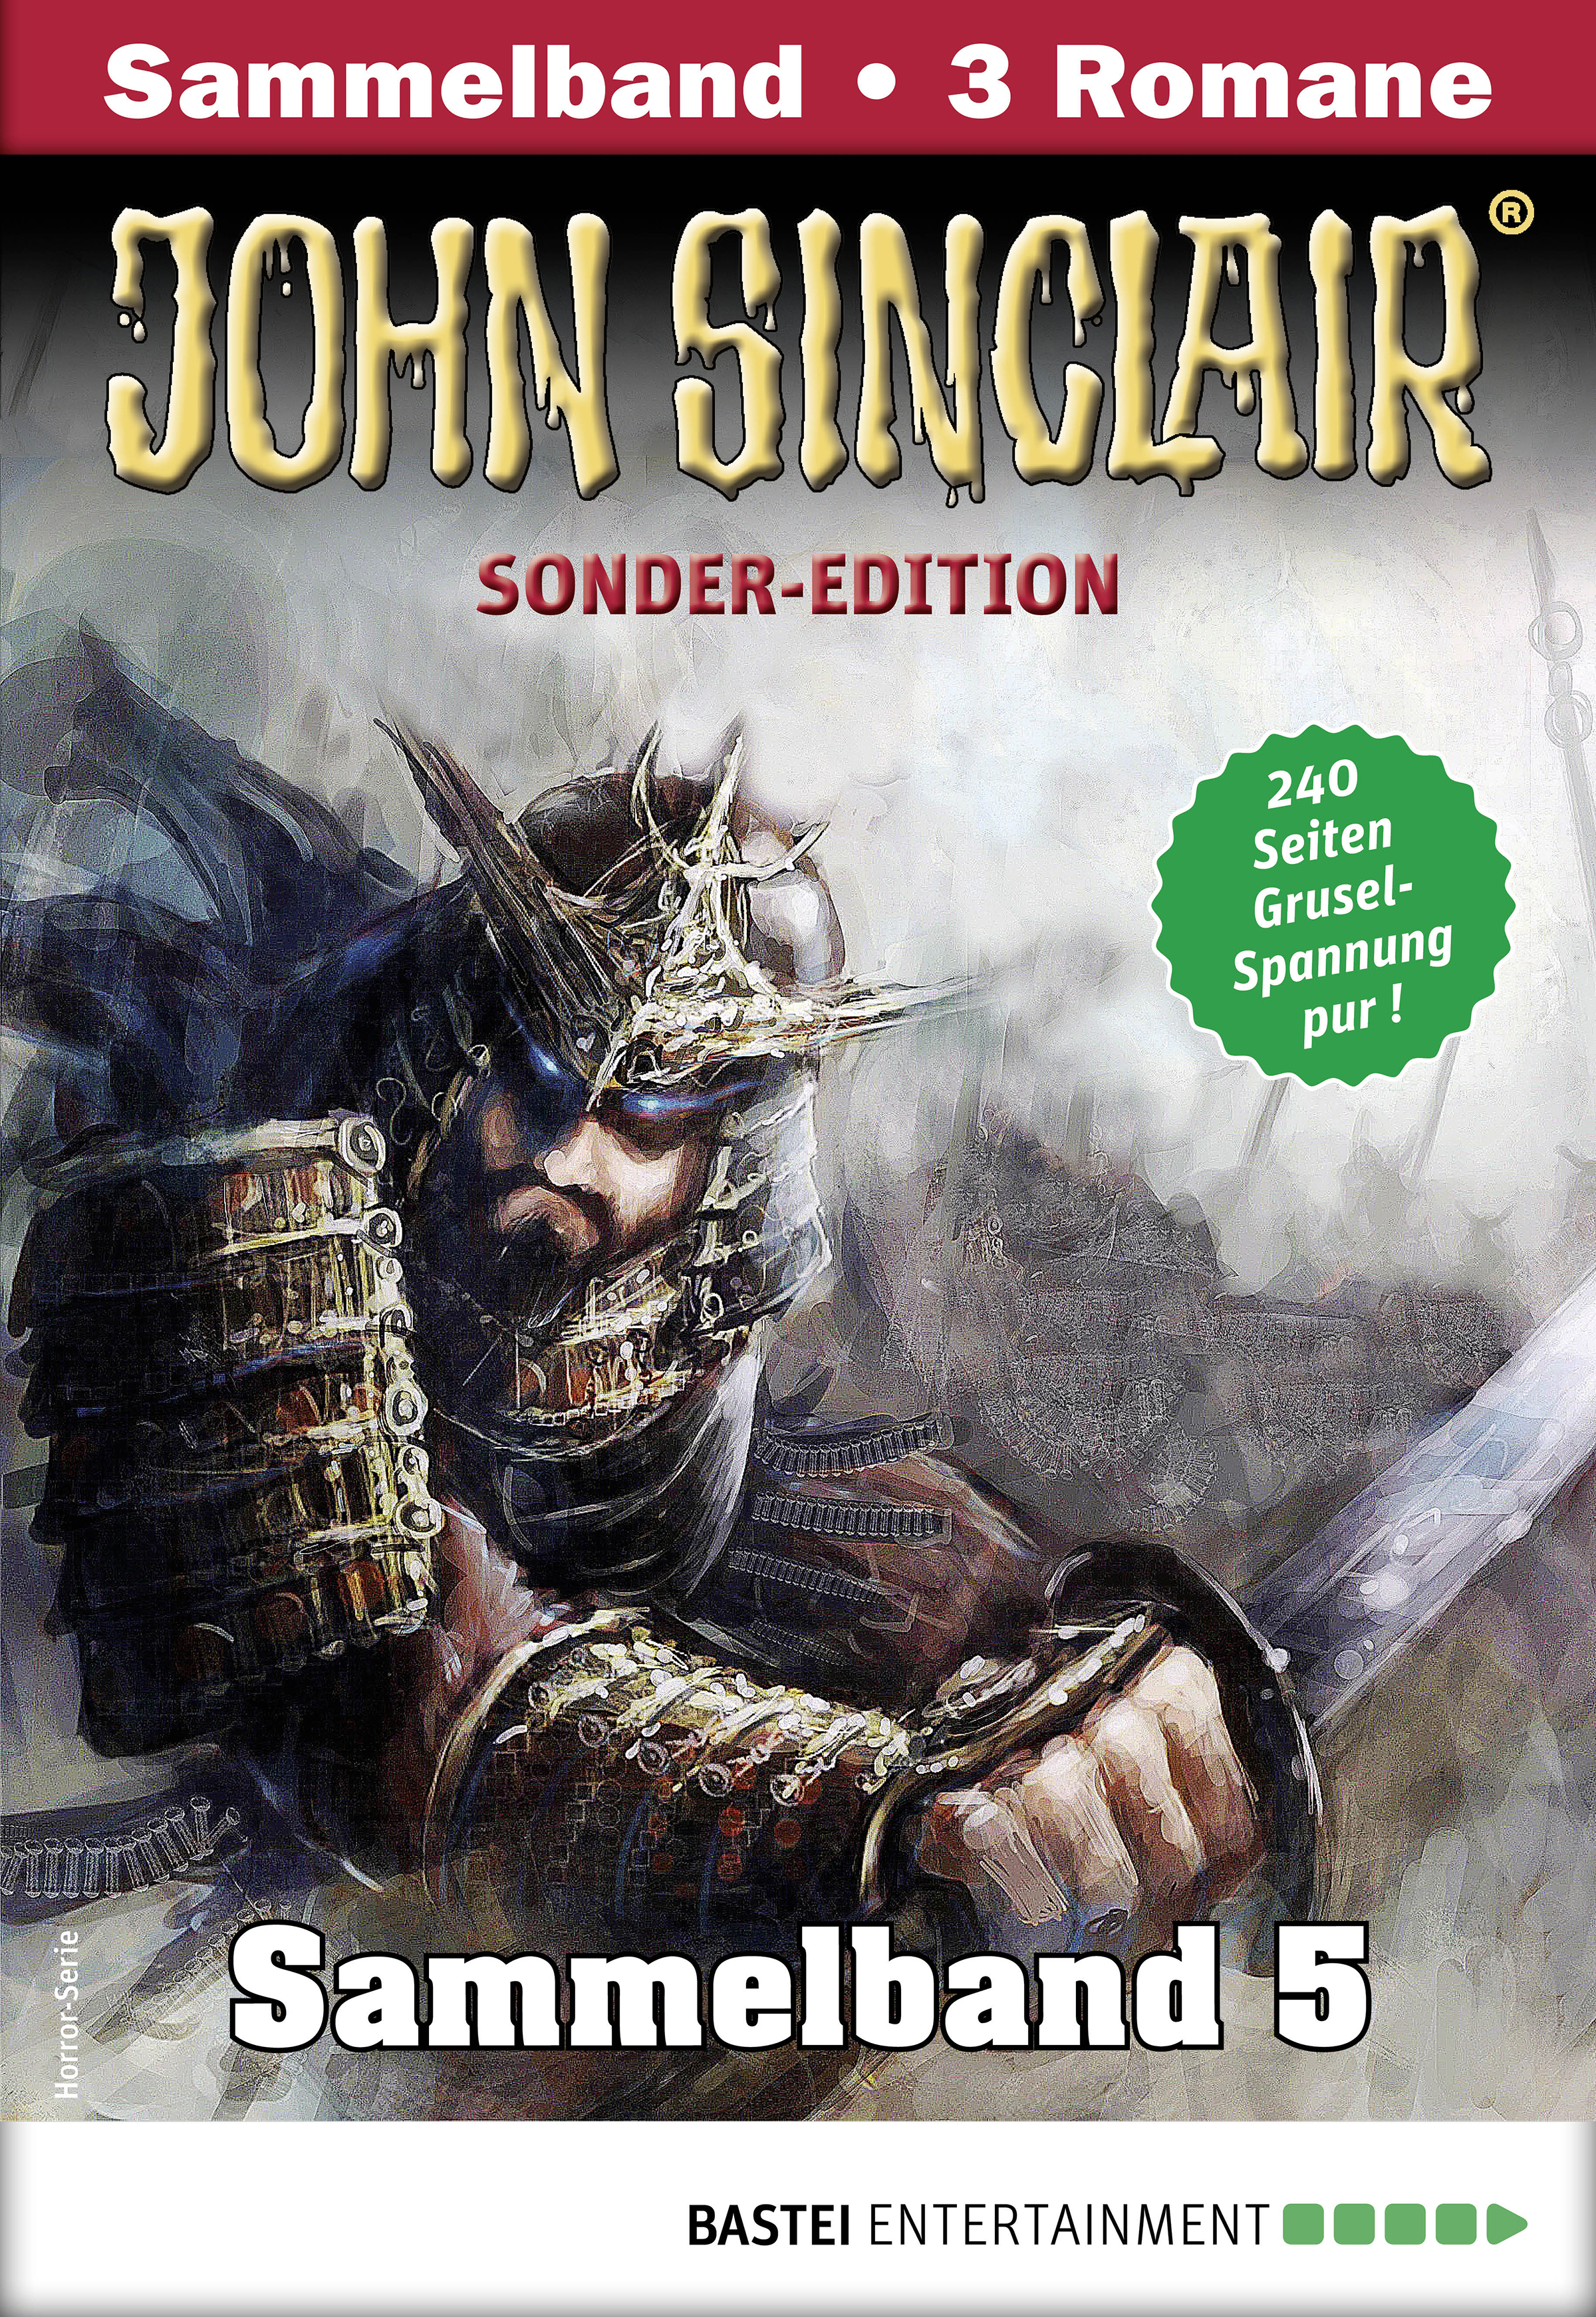 John Sinclair Sonder-Edition Sammelband 5 - Horror-Serie